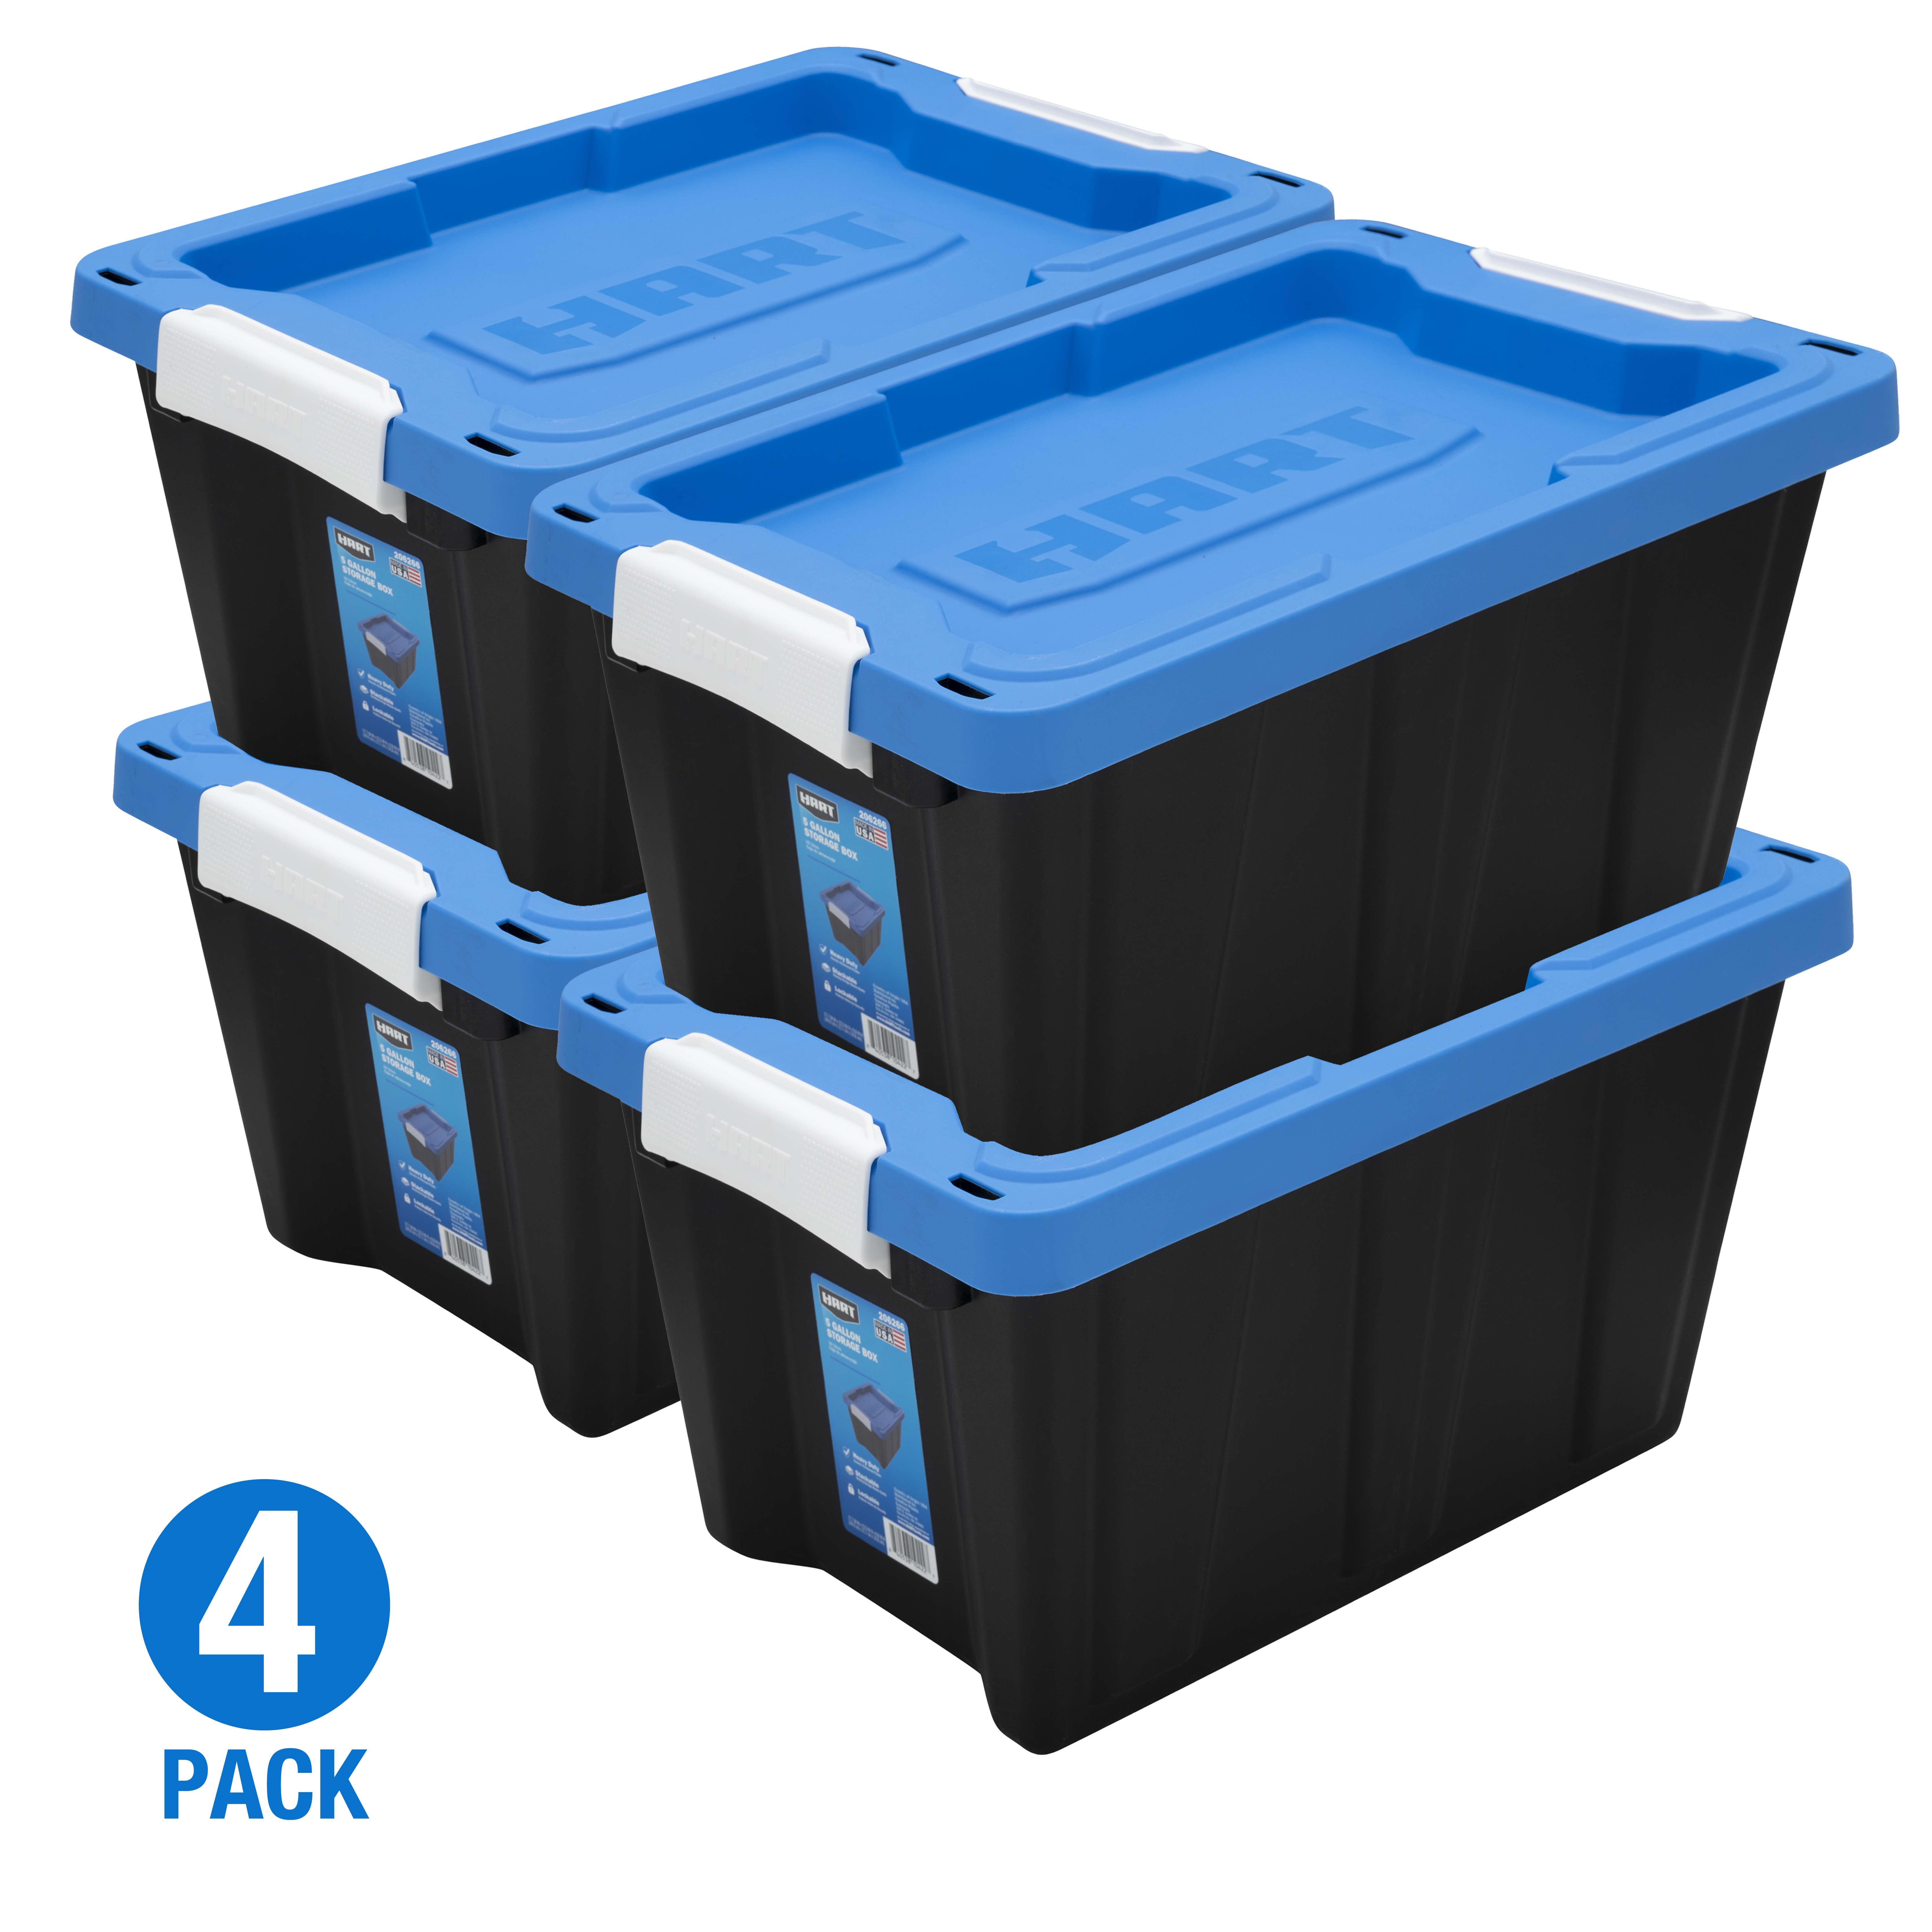 HART 18 Gallon Water Resistant Plastic Storage Bins, Black with Blue Lid 